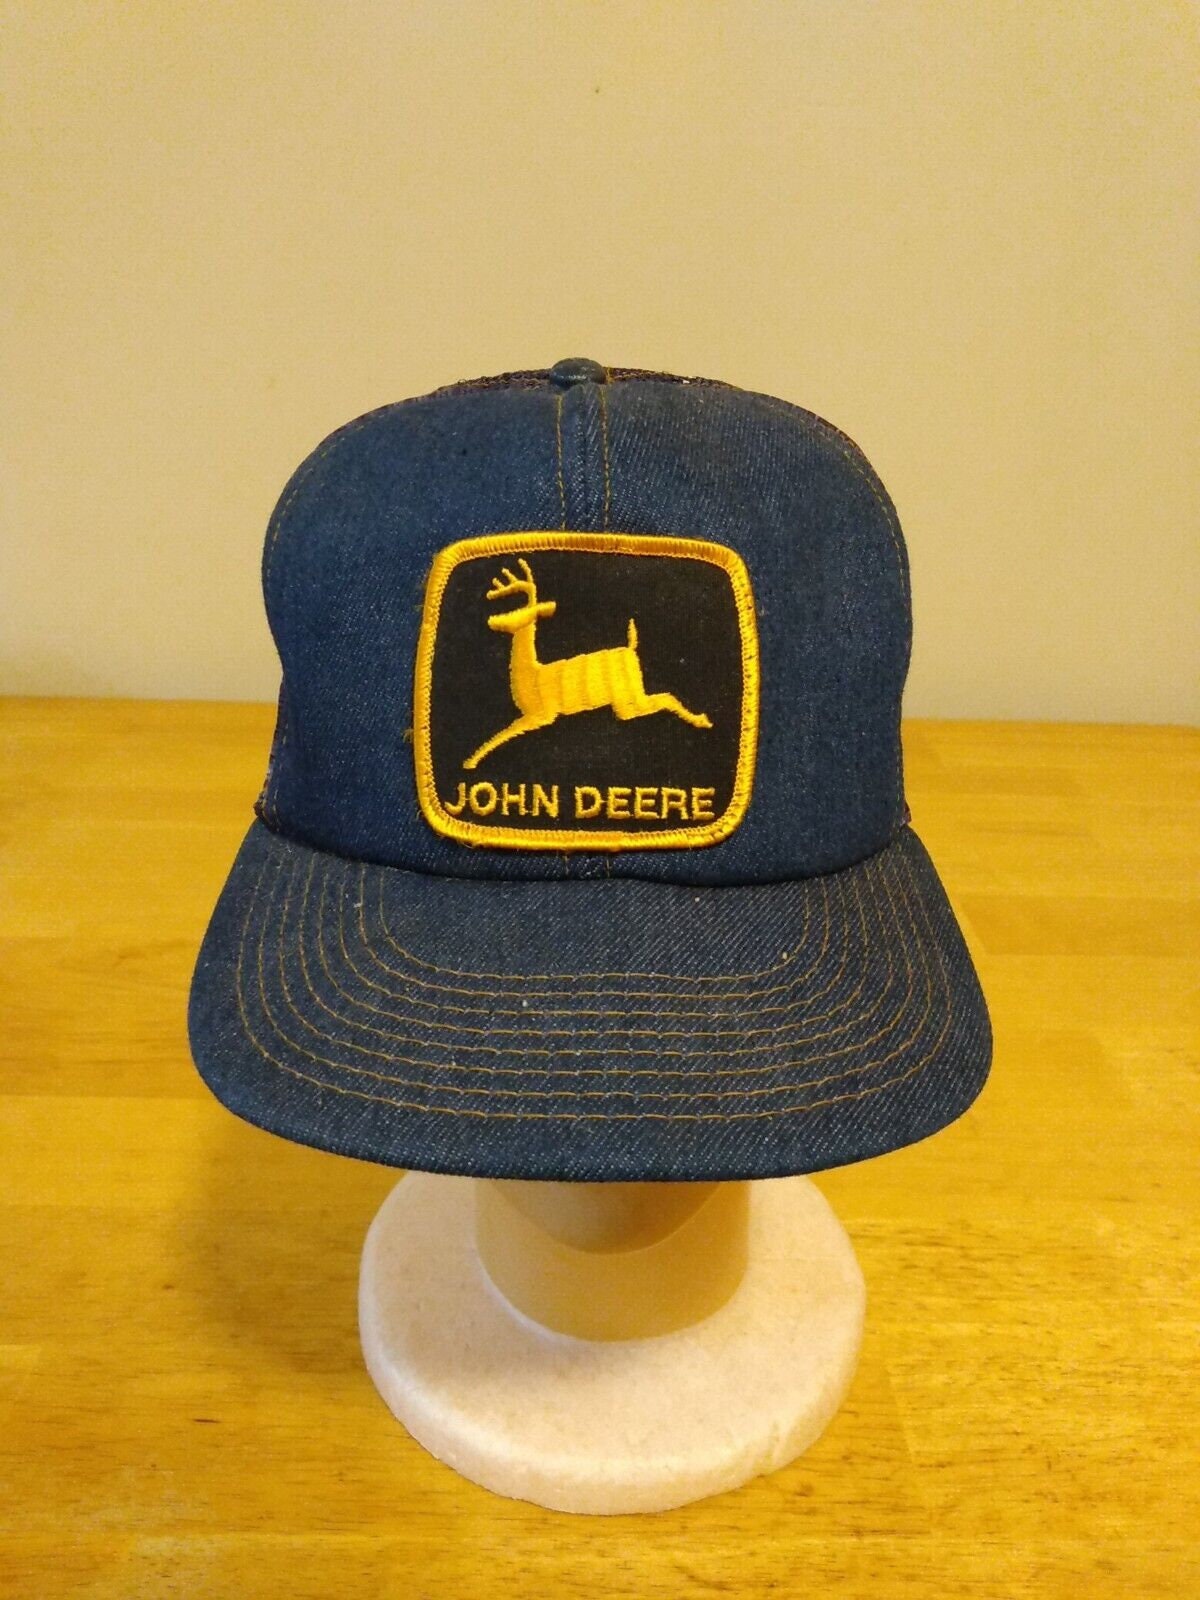 Buy Vintage John Deere Denim Mesh Snap Back Patch Trucker Hat Cap Made in  USA Online in India 